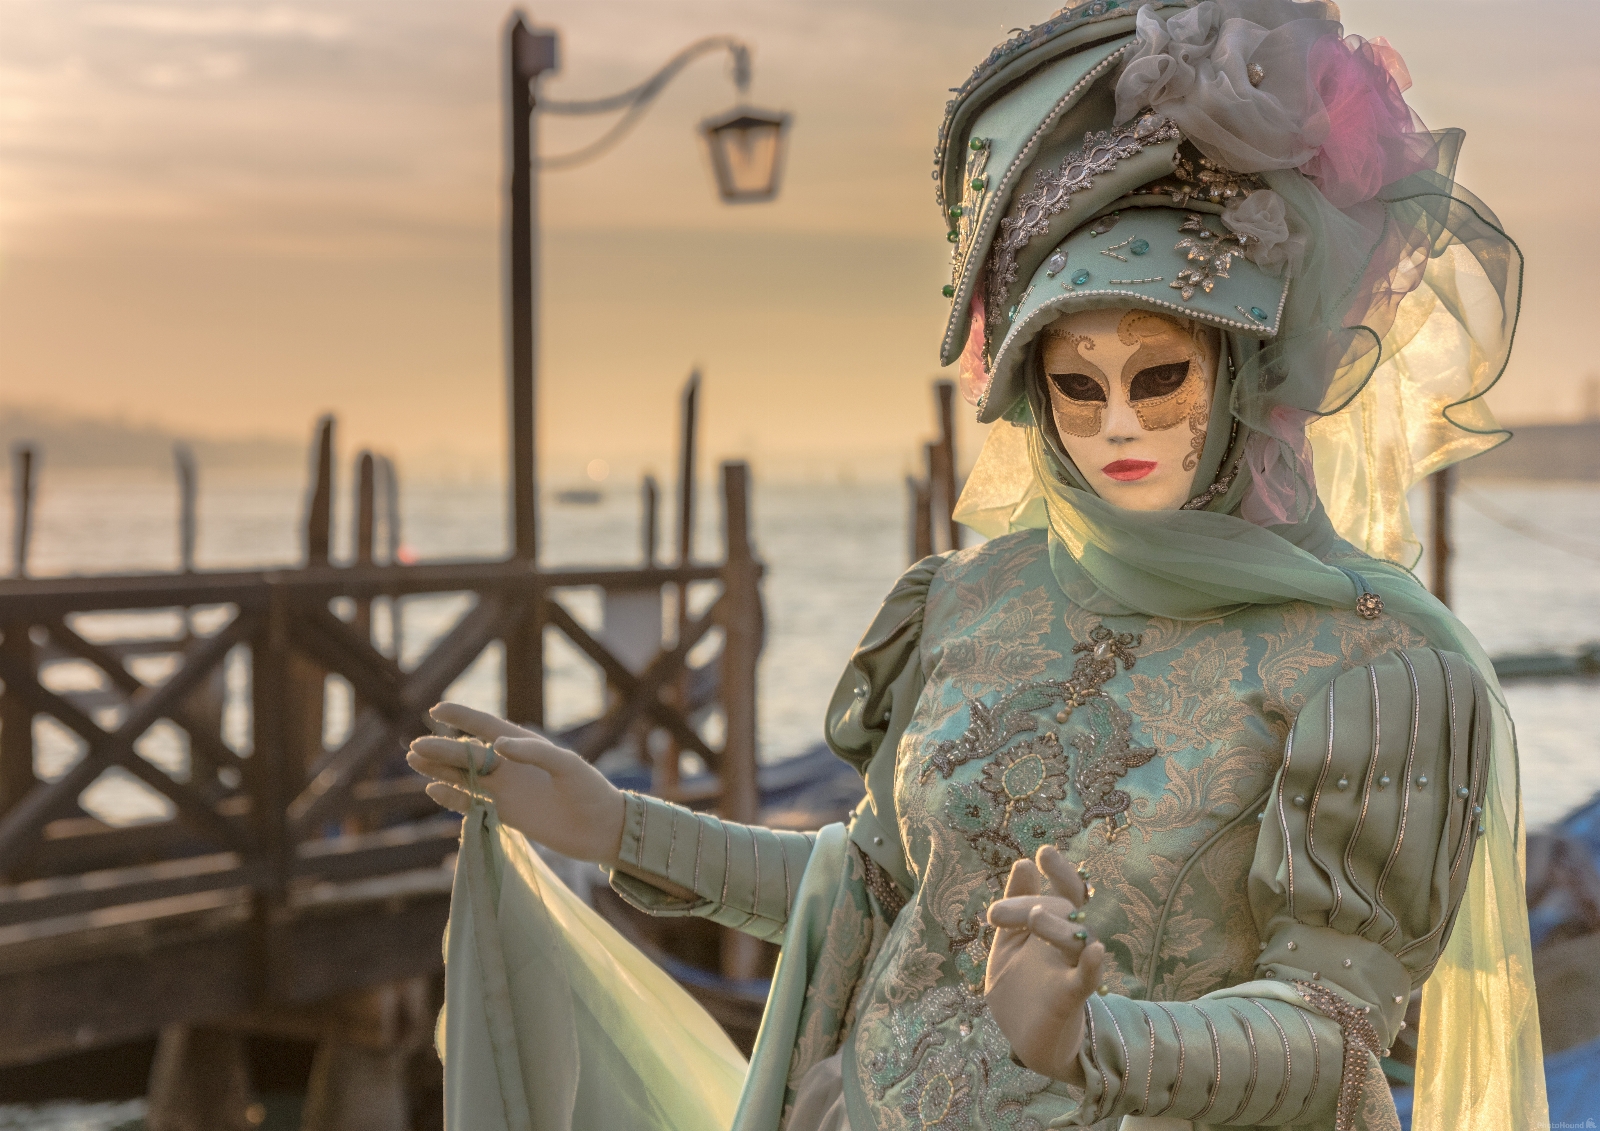 Image of Carnevale di Venezia (Venice Carnival) by LARISA Cekanavica